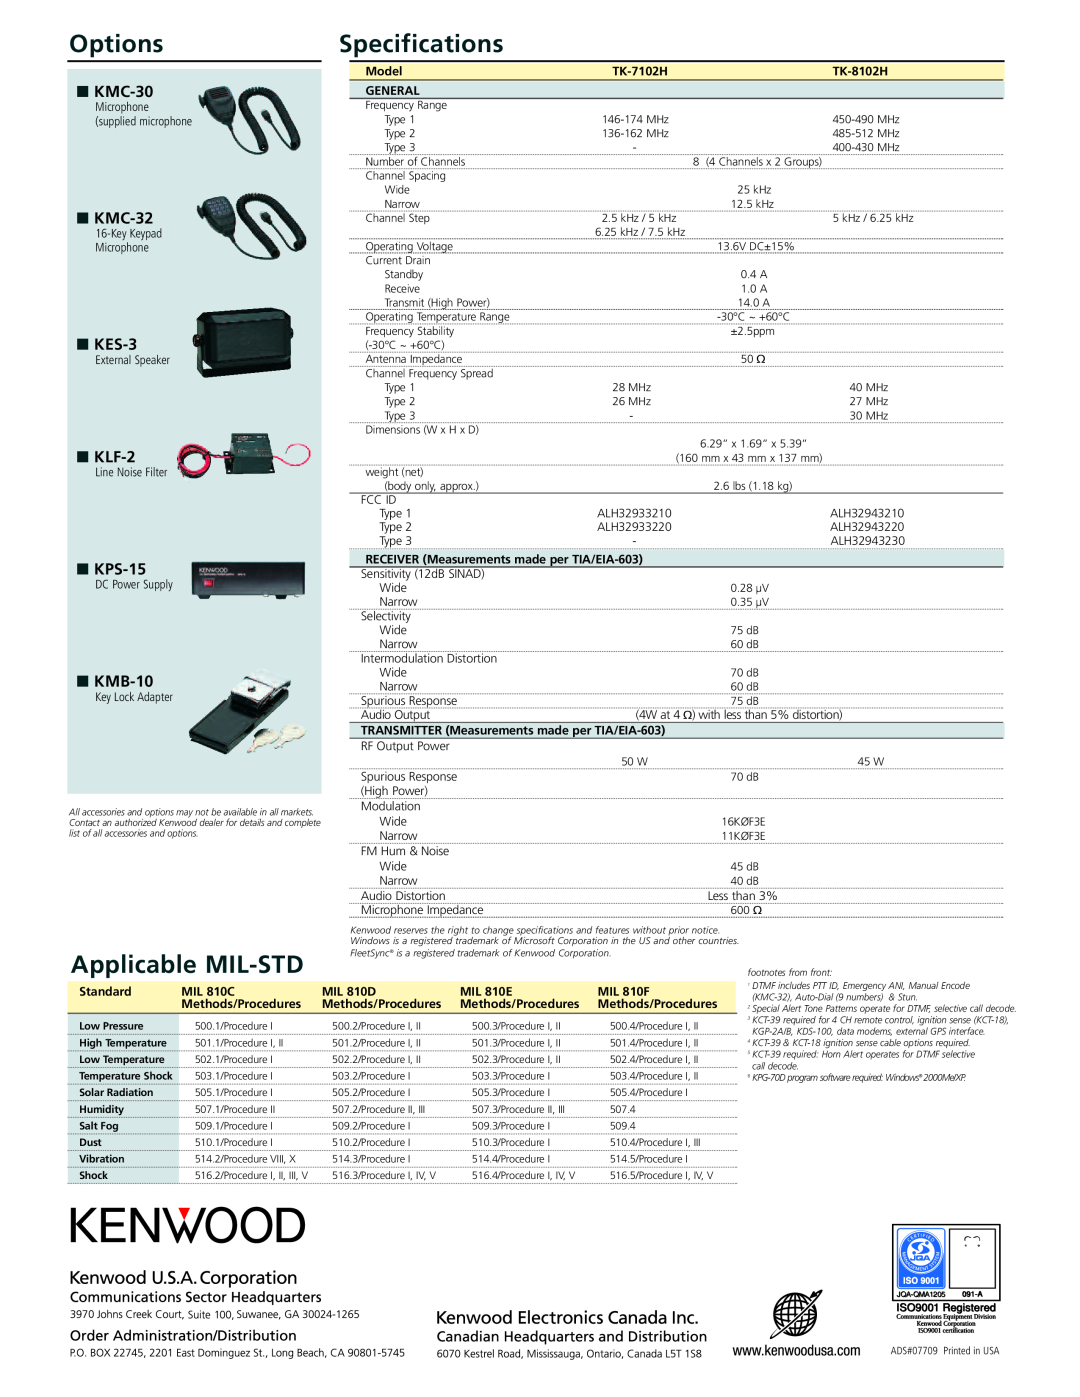 Kenwood TK-8102H manual OptionsSpecifications, Applicable MIL-STD, KMC-30, KMC-32, KES-3, KLF-2, KPS-15, KMB-10 